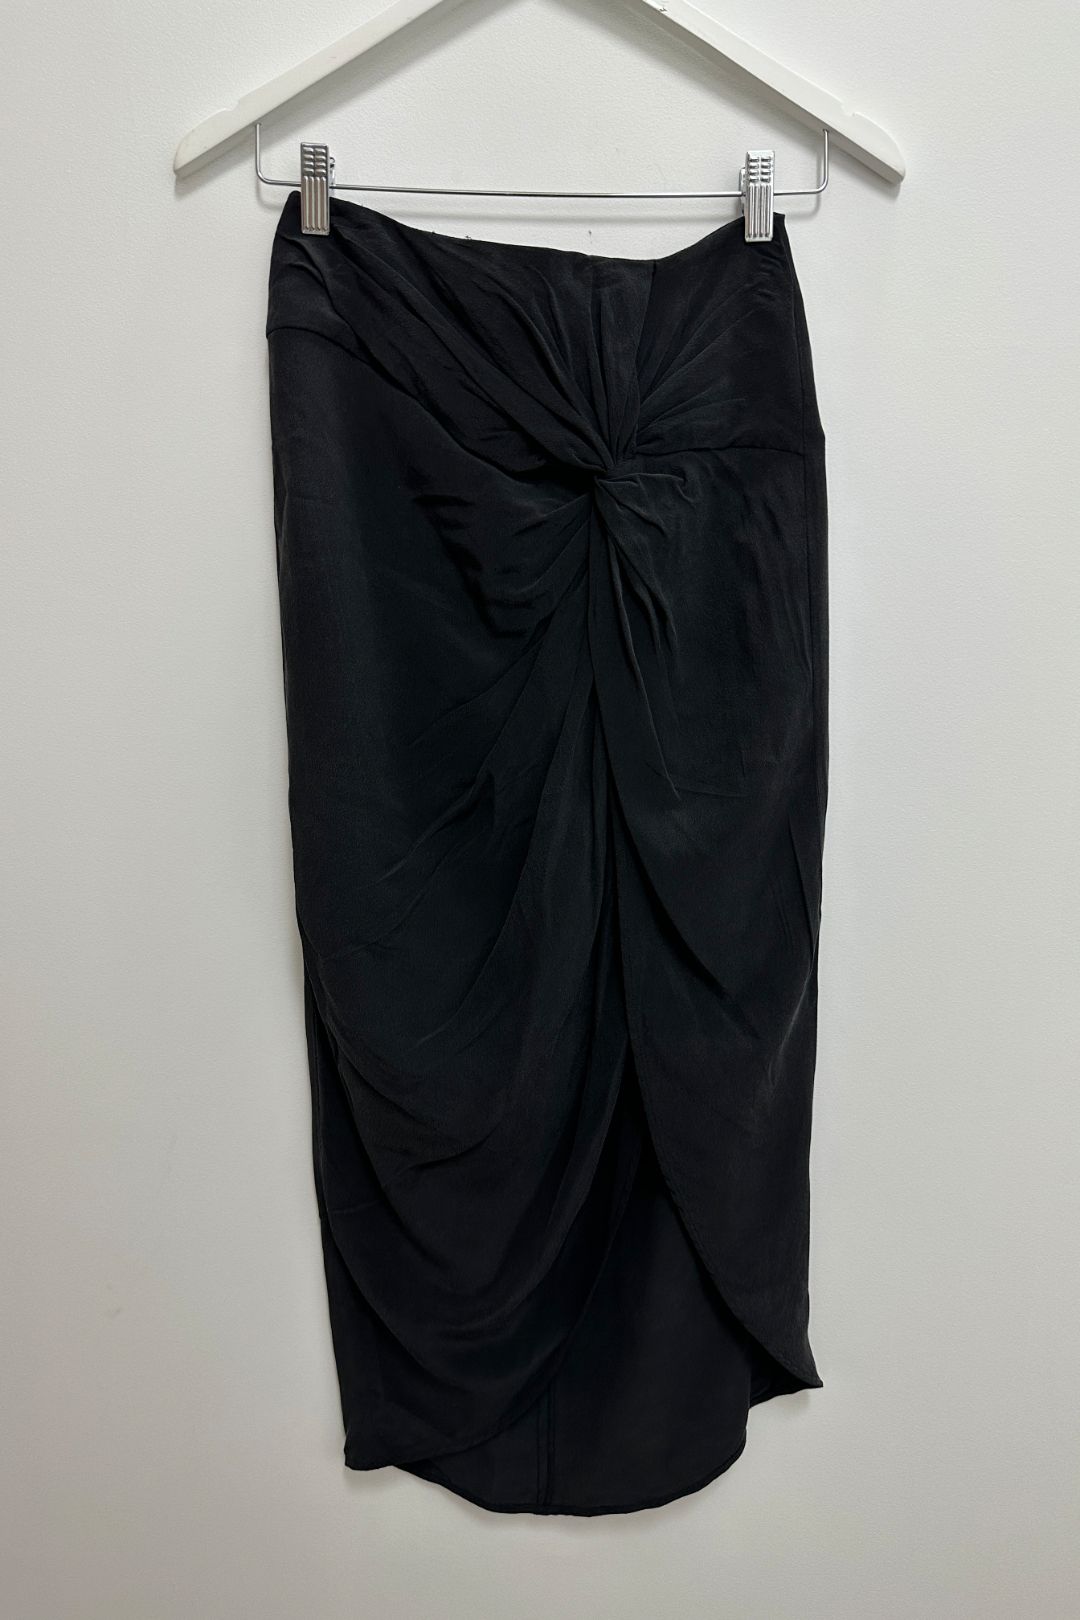 Zimmermann Black Silk Knot Midi Skirt